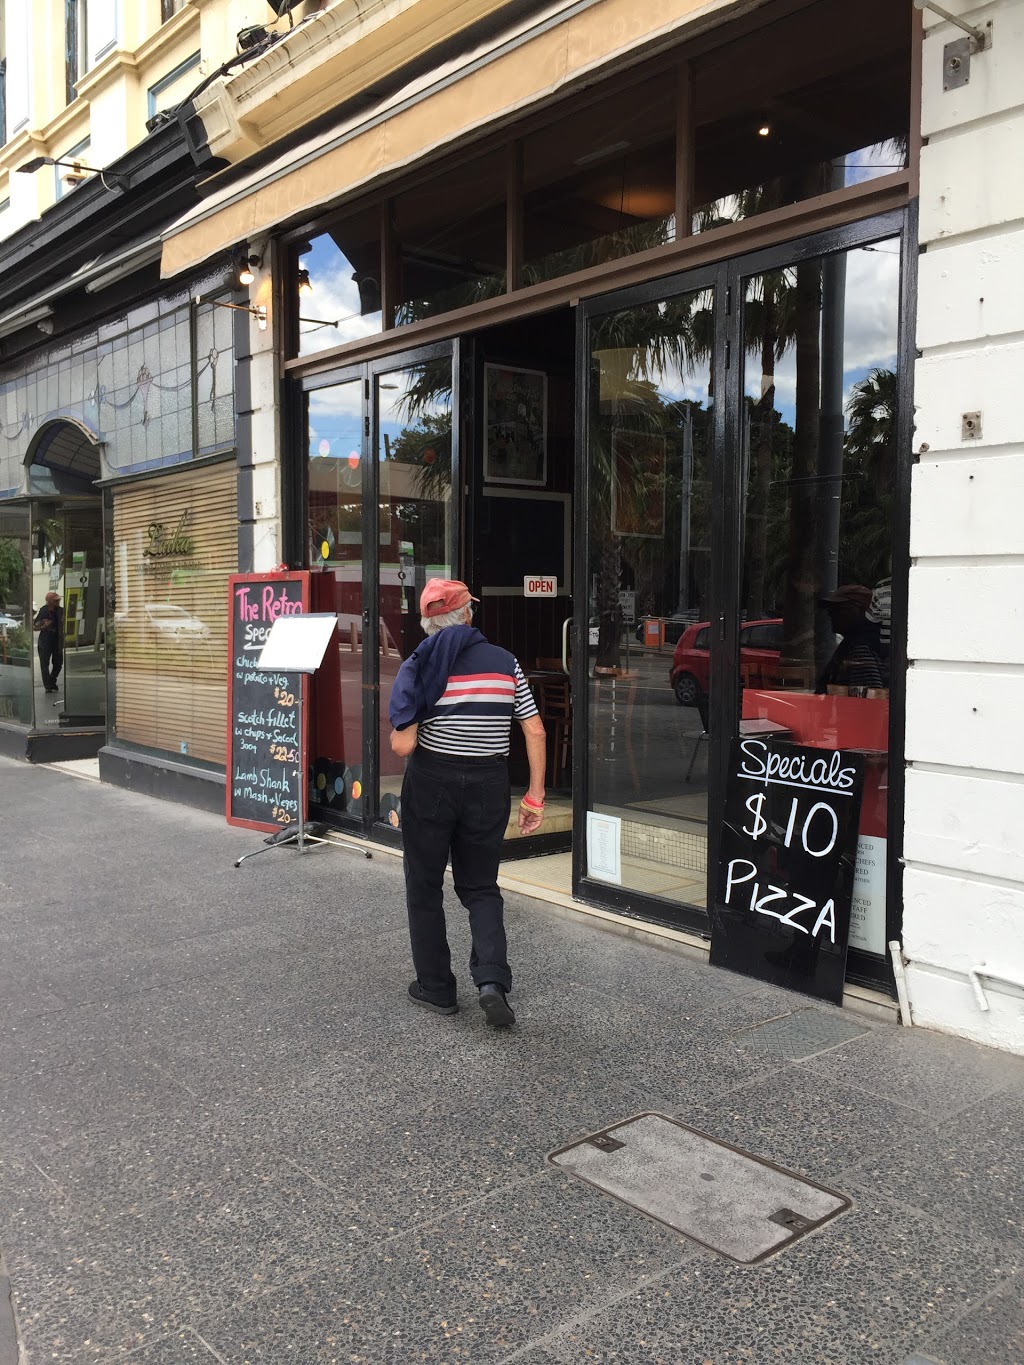 The Retro on Fitzroy Street | restaurant | 7 Fitzroy St, St Kilda VIC 3182, Australia